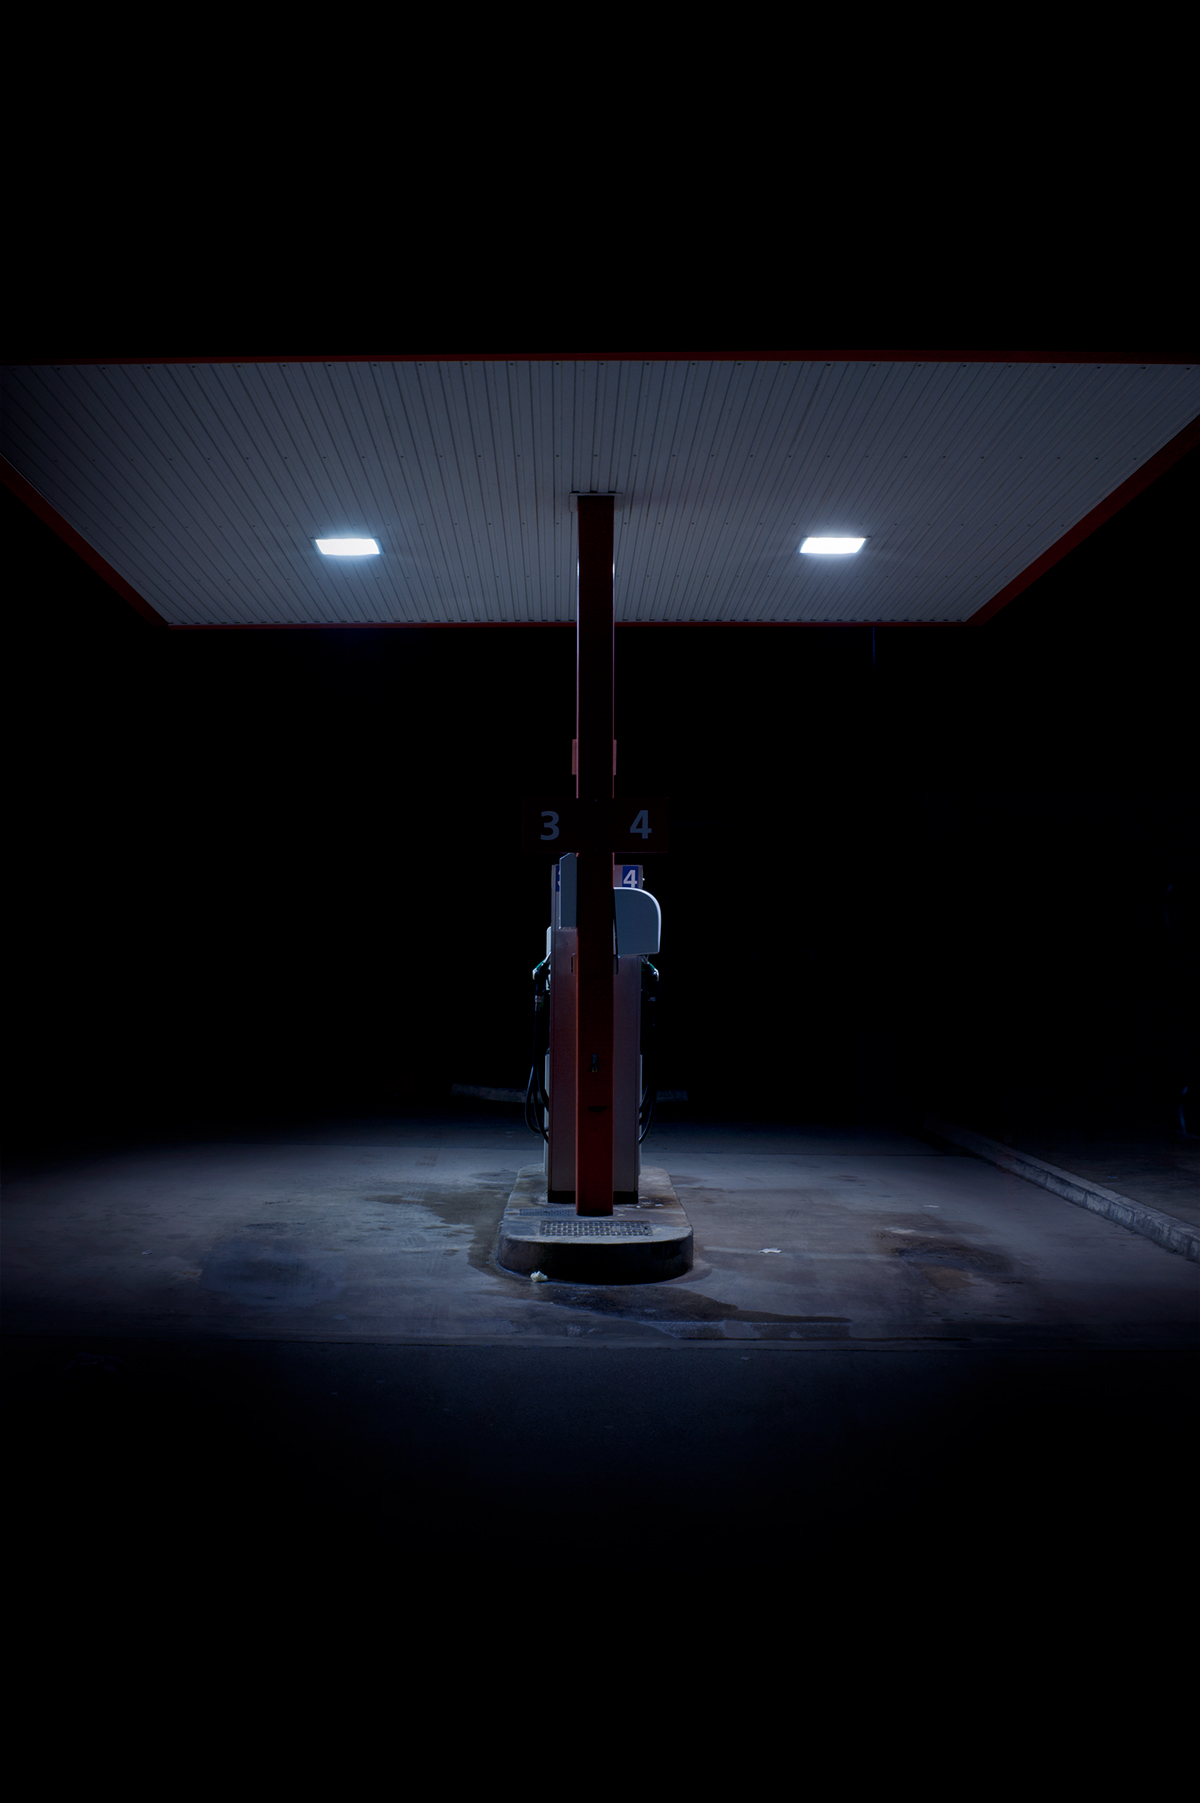 petrol STATION night dark scream movie light